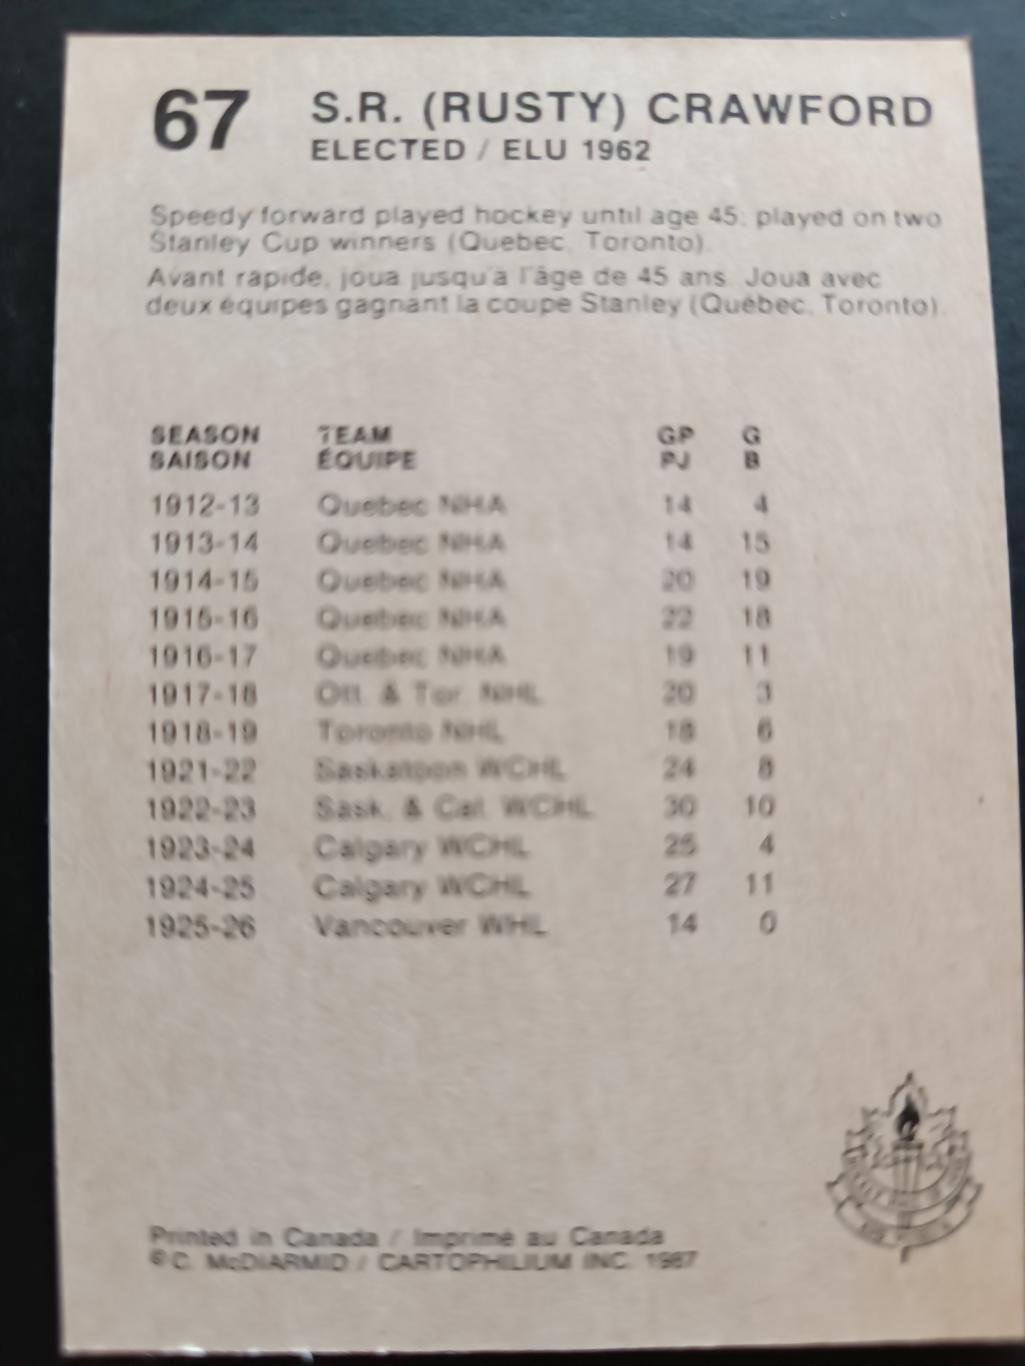 ХОККЕЙ КАРТОЧКА НХЛ CARTOPHILIUM HALL OF FAME 1987 NHL S R RUSTY CRAWFORD #67 1